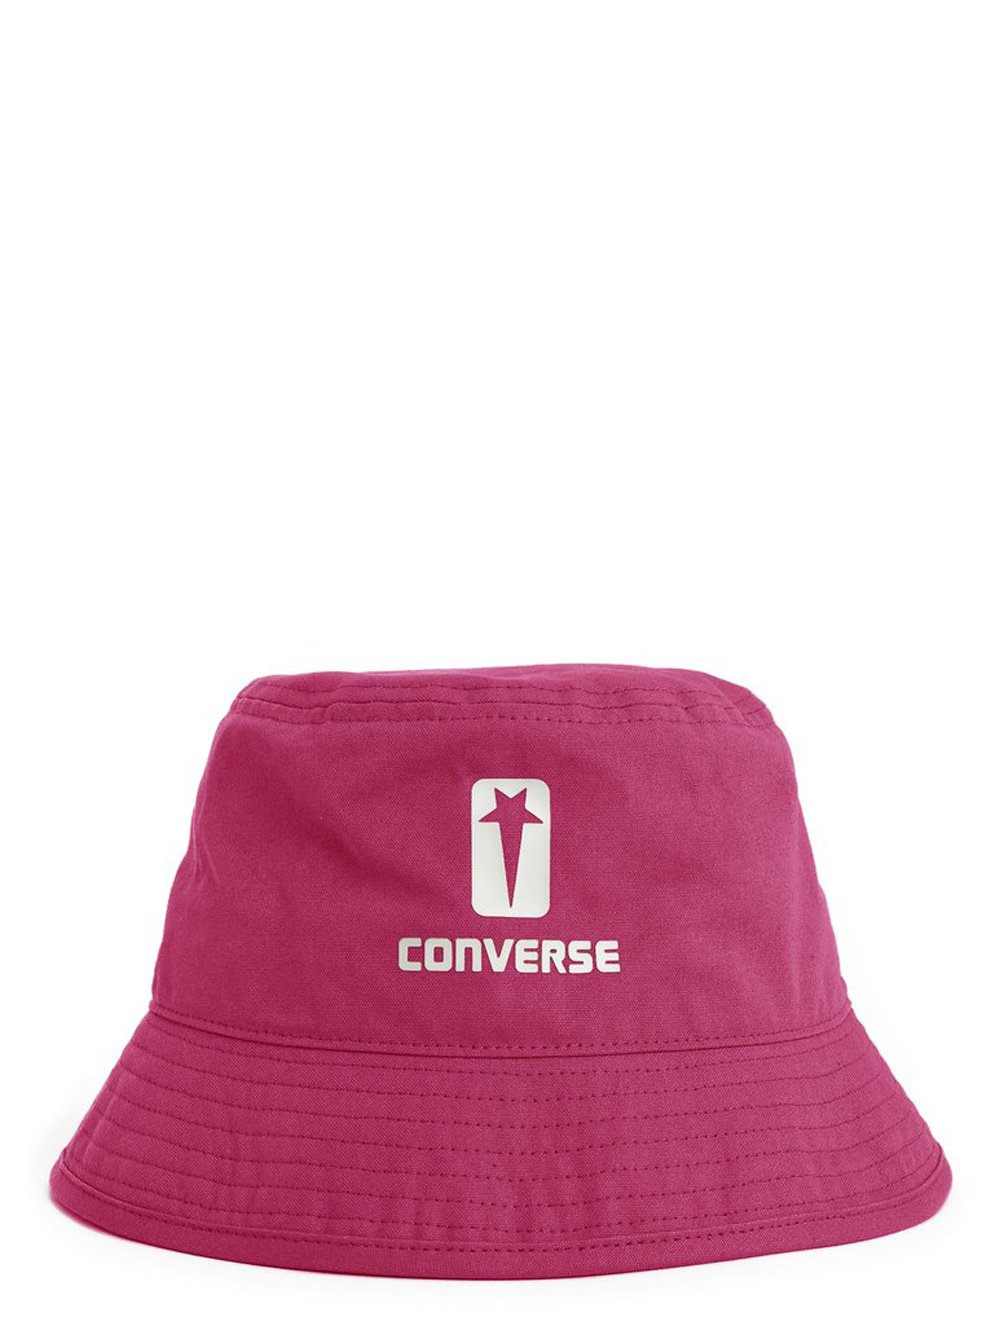 CONVERSE X DRKSHDW BUCKET HAT IN HOT PINK